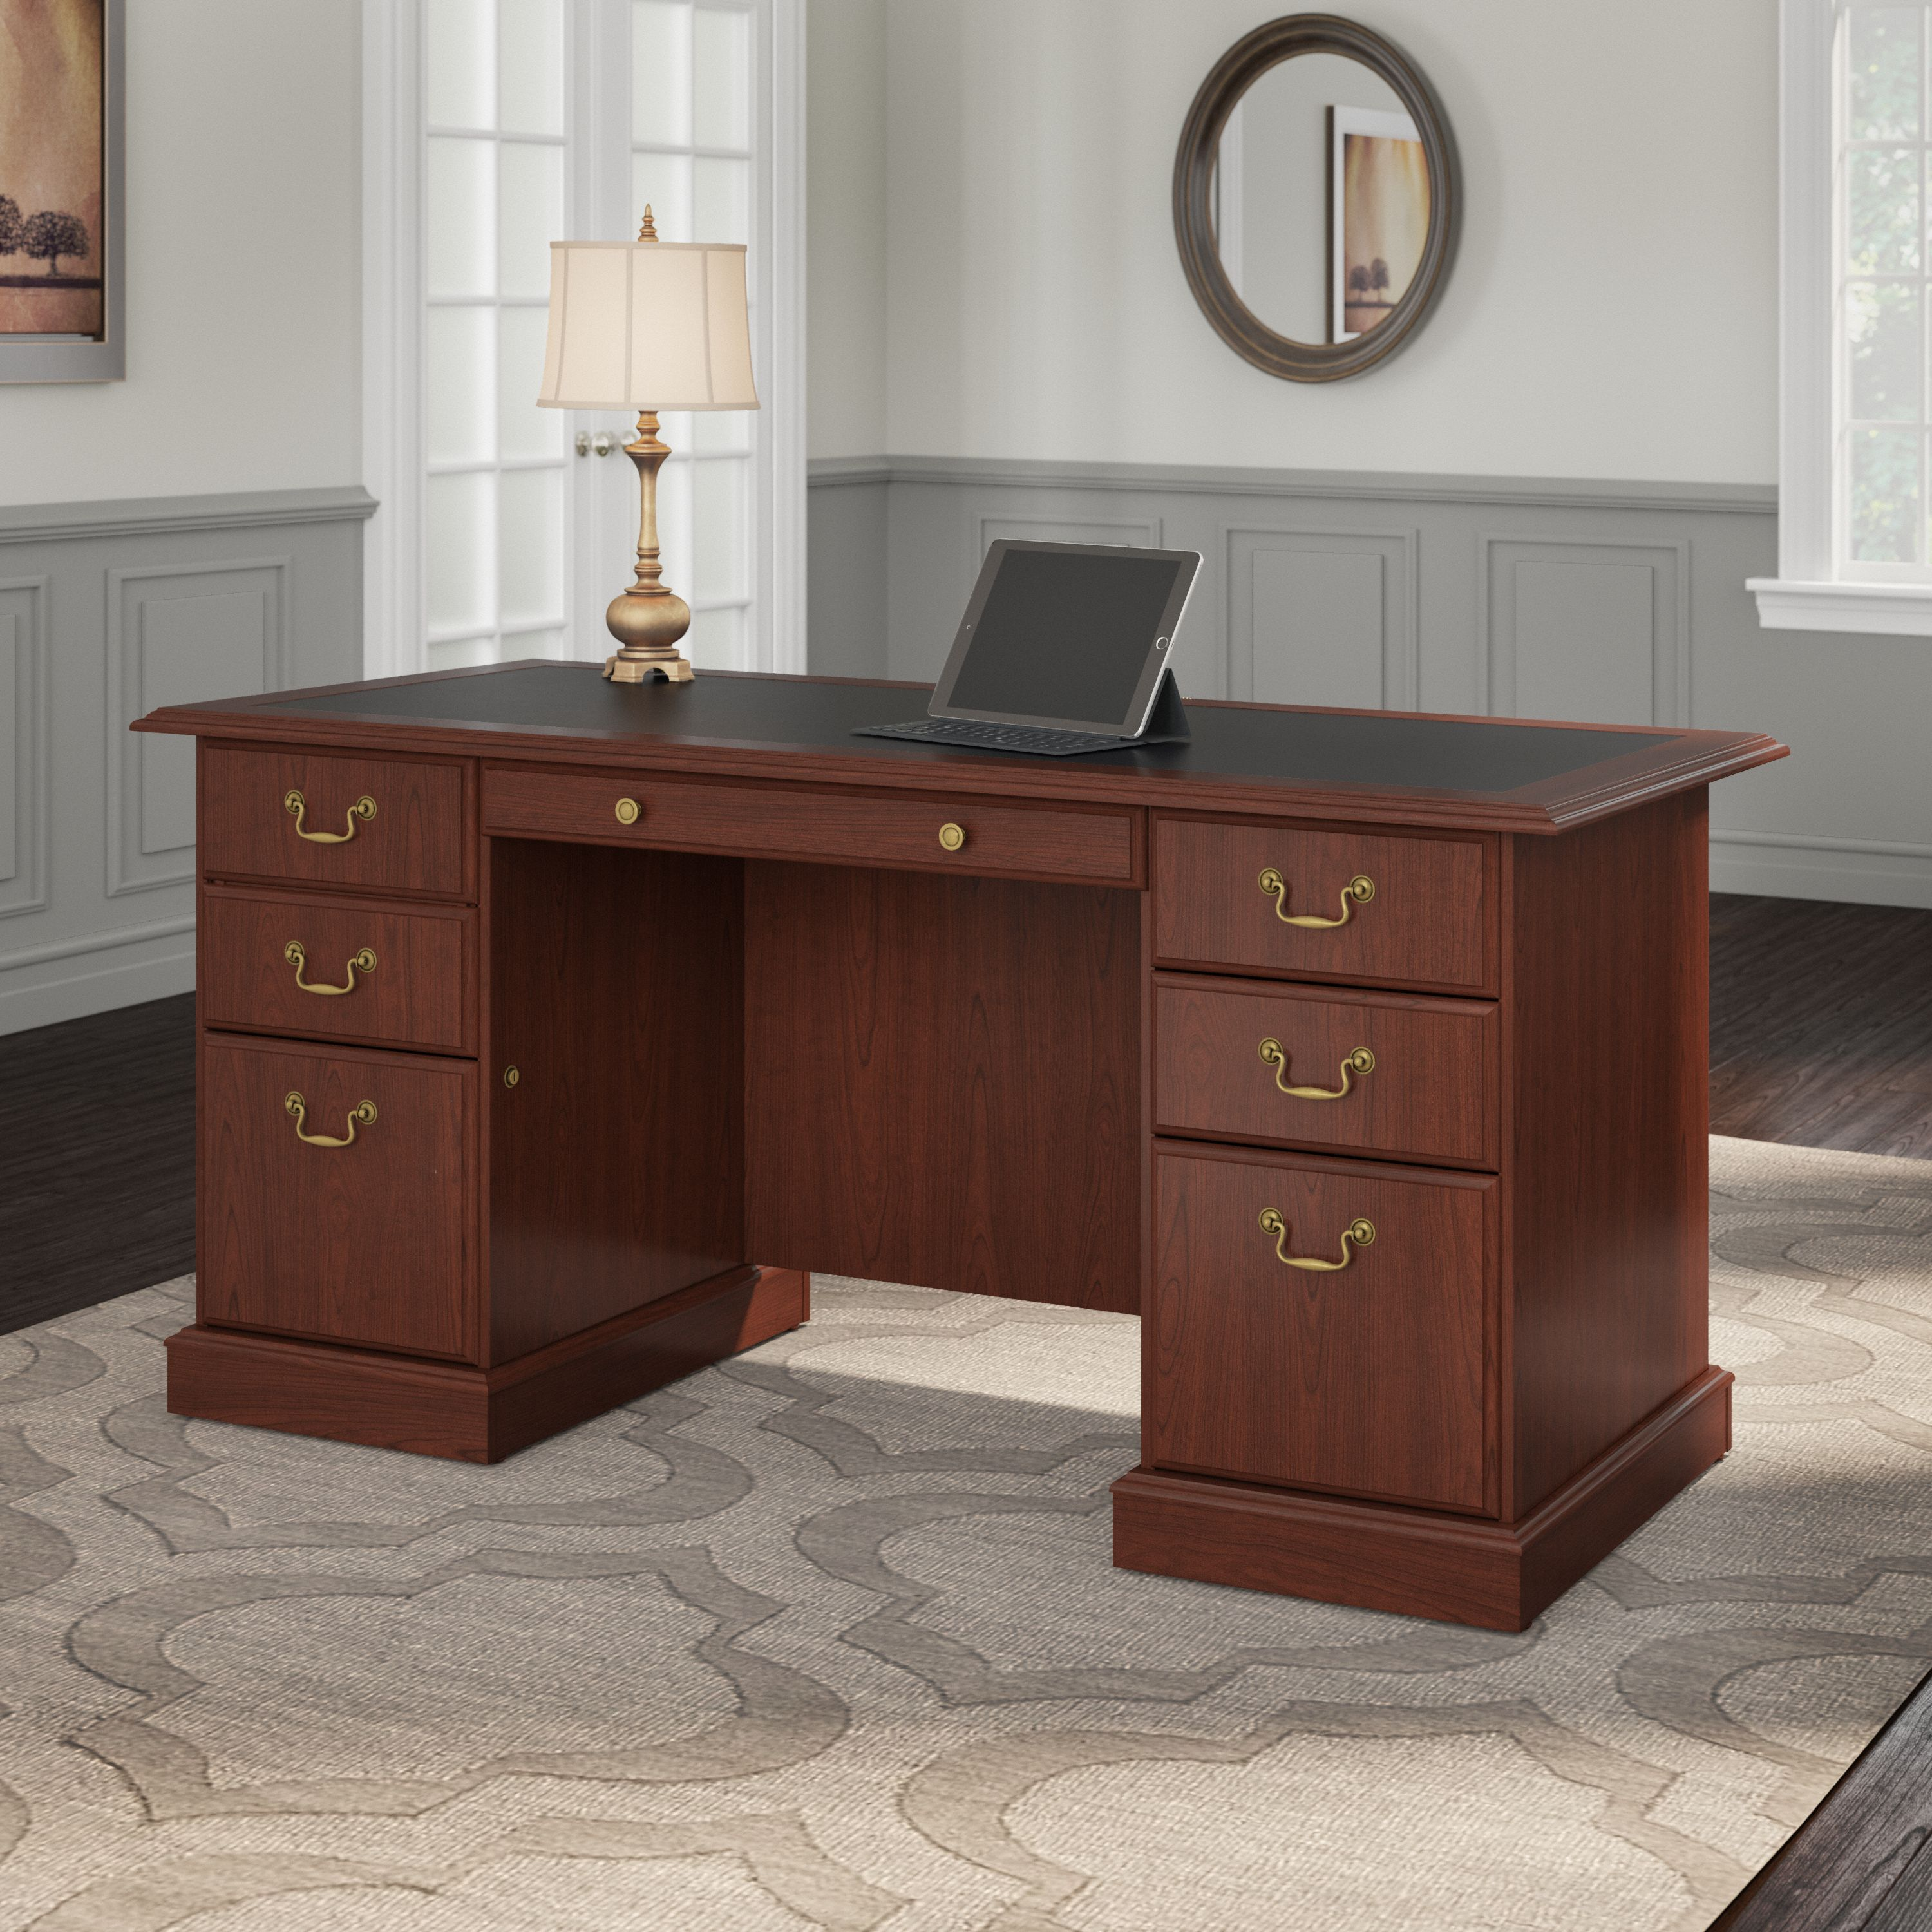 Shop Bush Furniture Saratoga Executive Desk with Drawers 01 EX45666-03K #color_harvest cherry/black